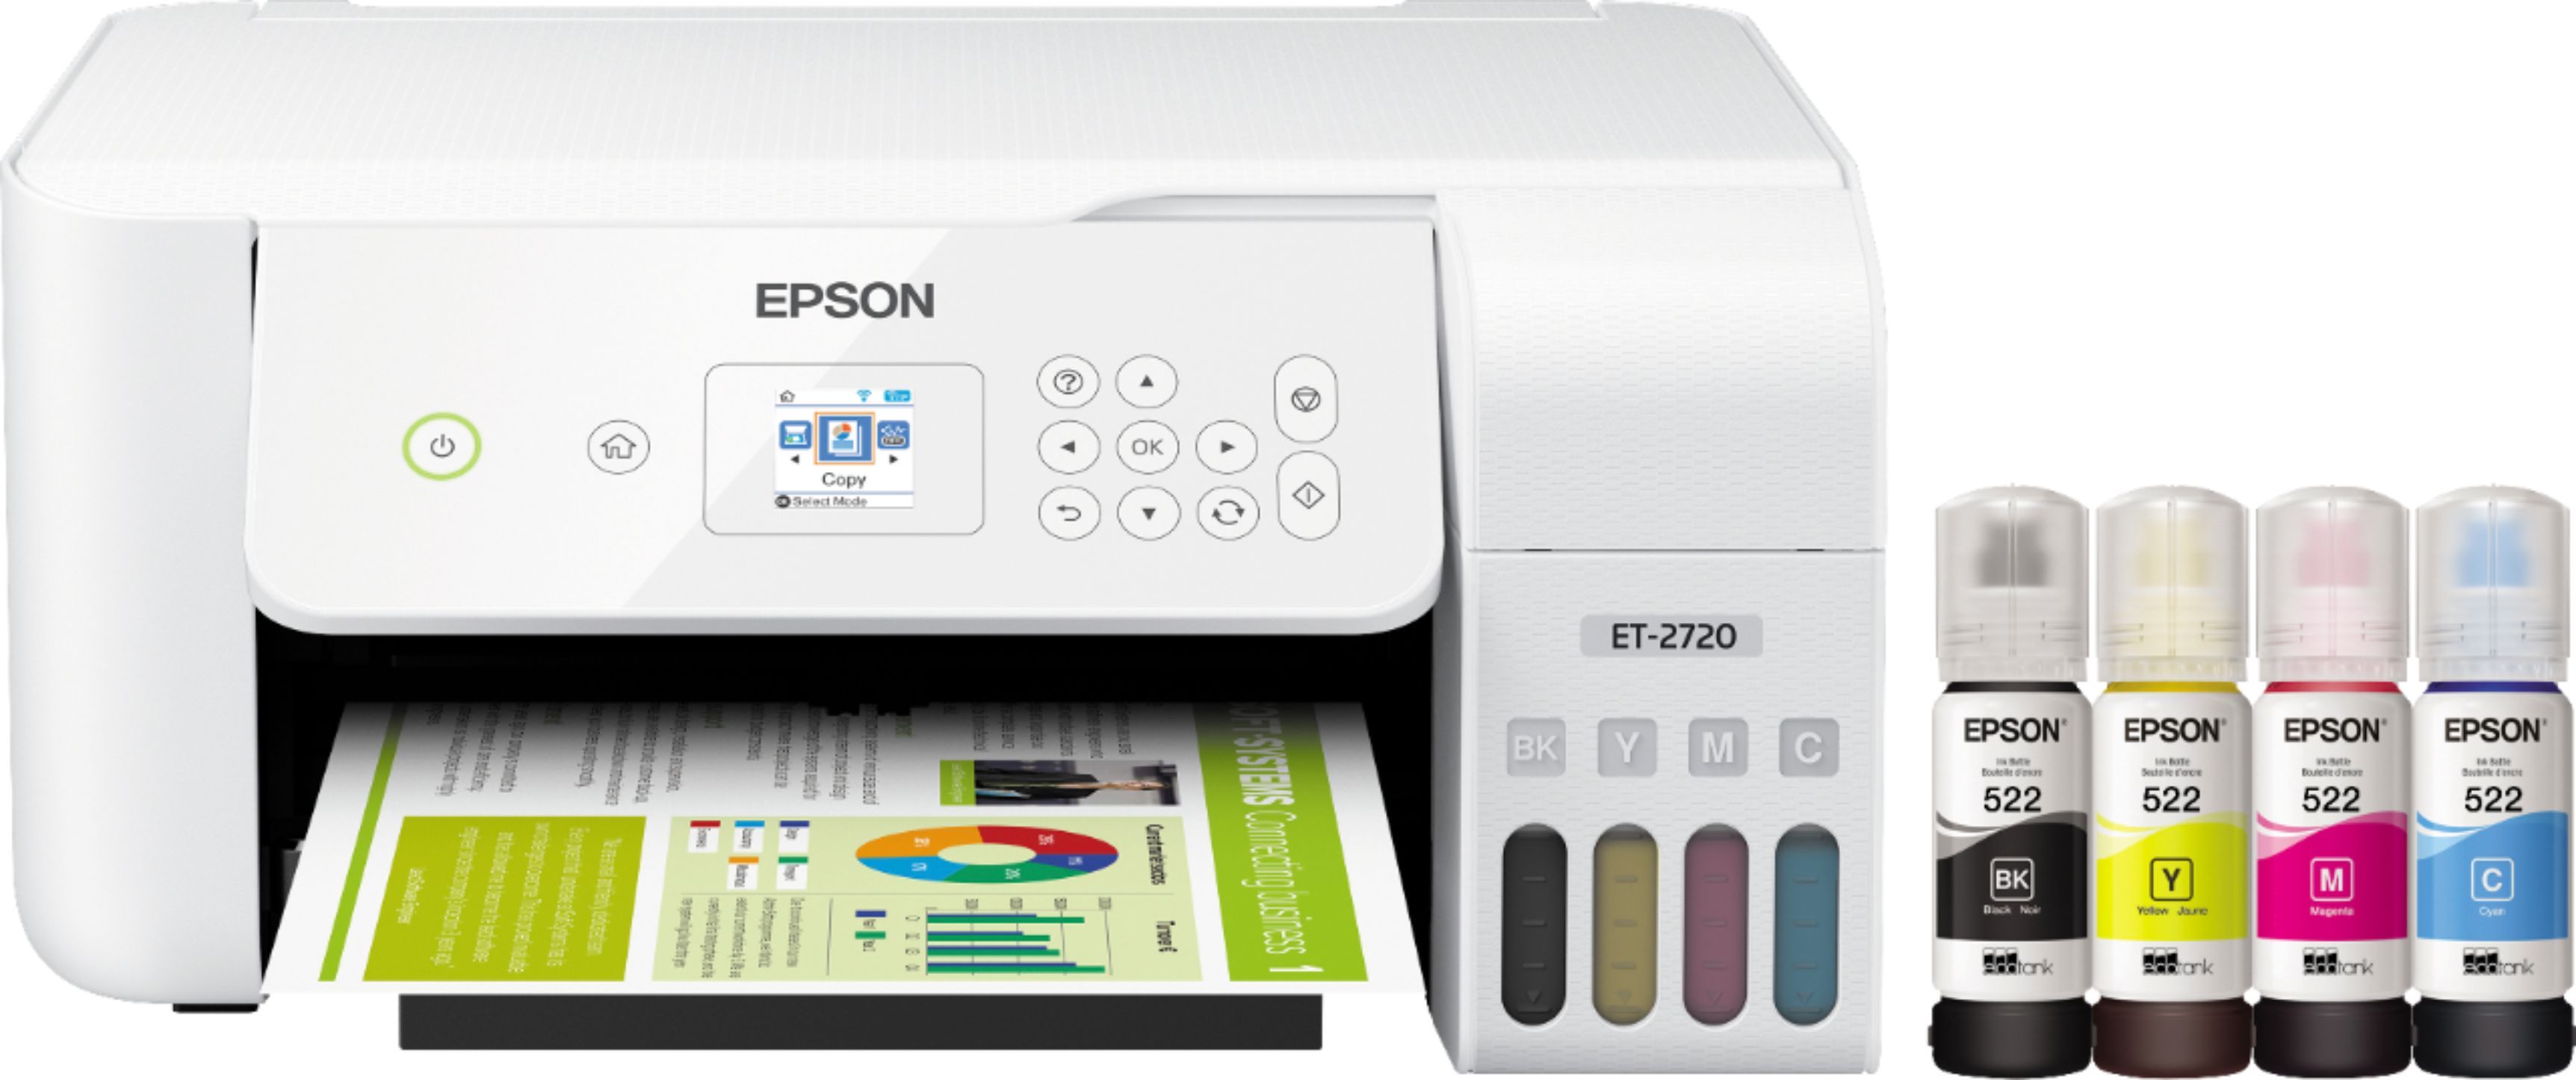 Epson EcoTank ET-2720 Wireless All-In-One Inkjet Printer White ECOTANK ET-2720 PRINTER C11CH4 - B... | Best Buy U.S.